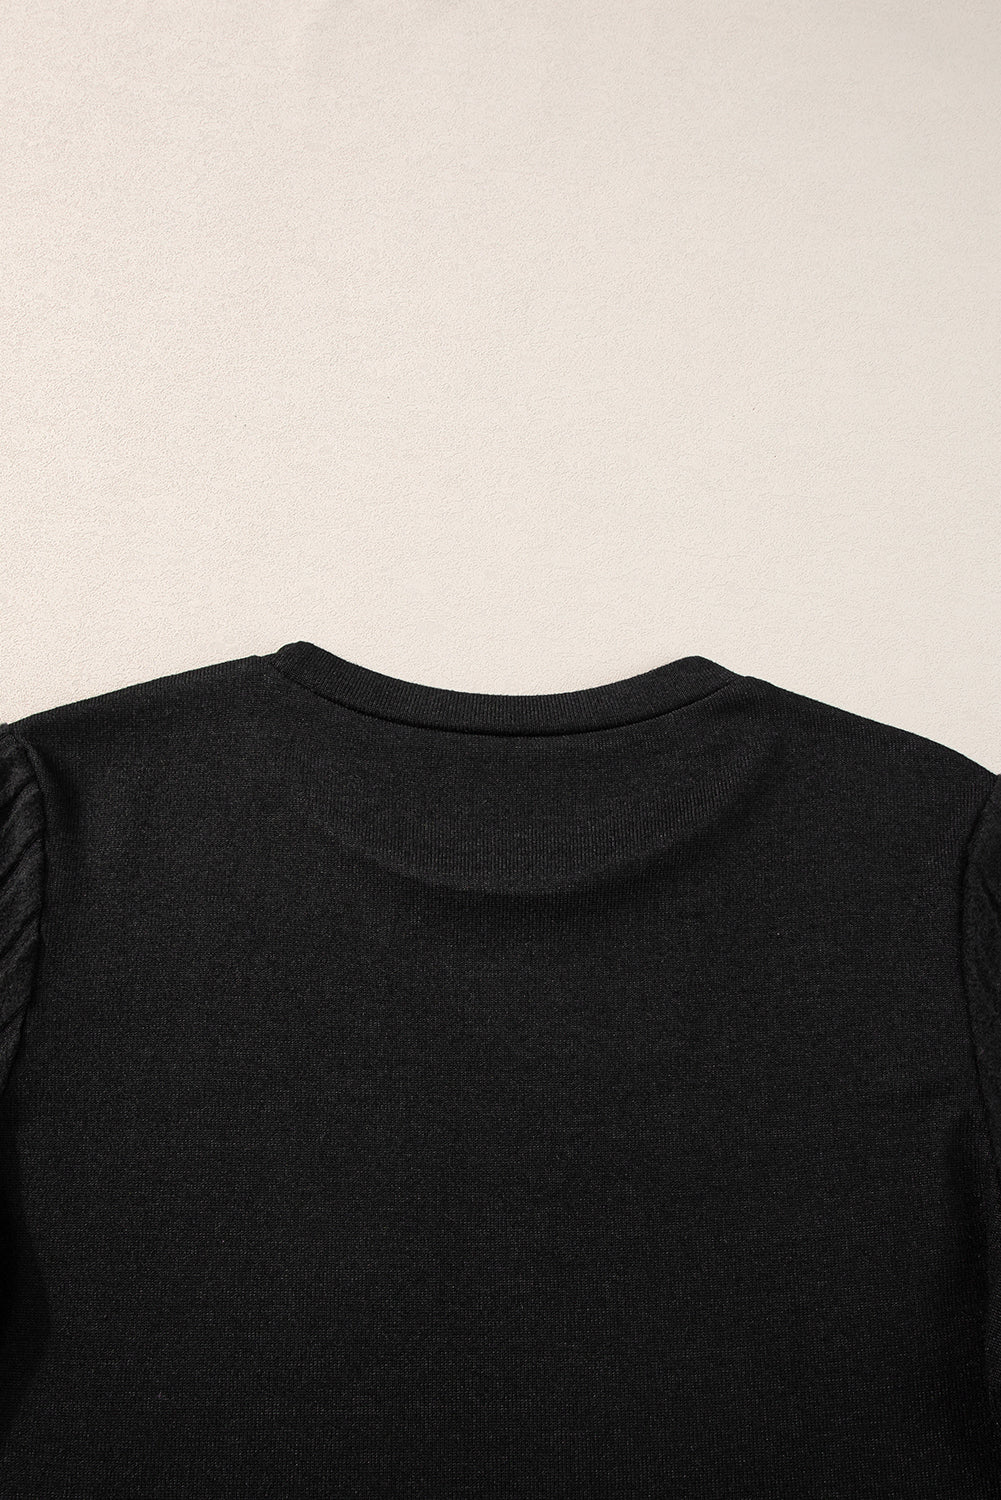 Black Ribbed Splicing Sleeve Round Neck T-shirt